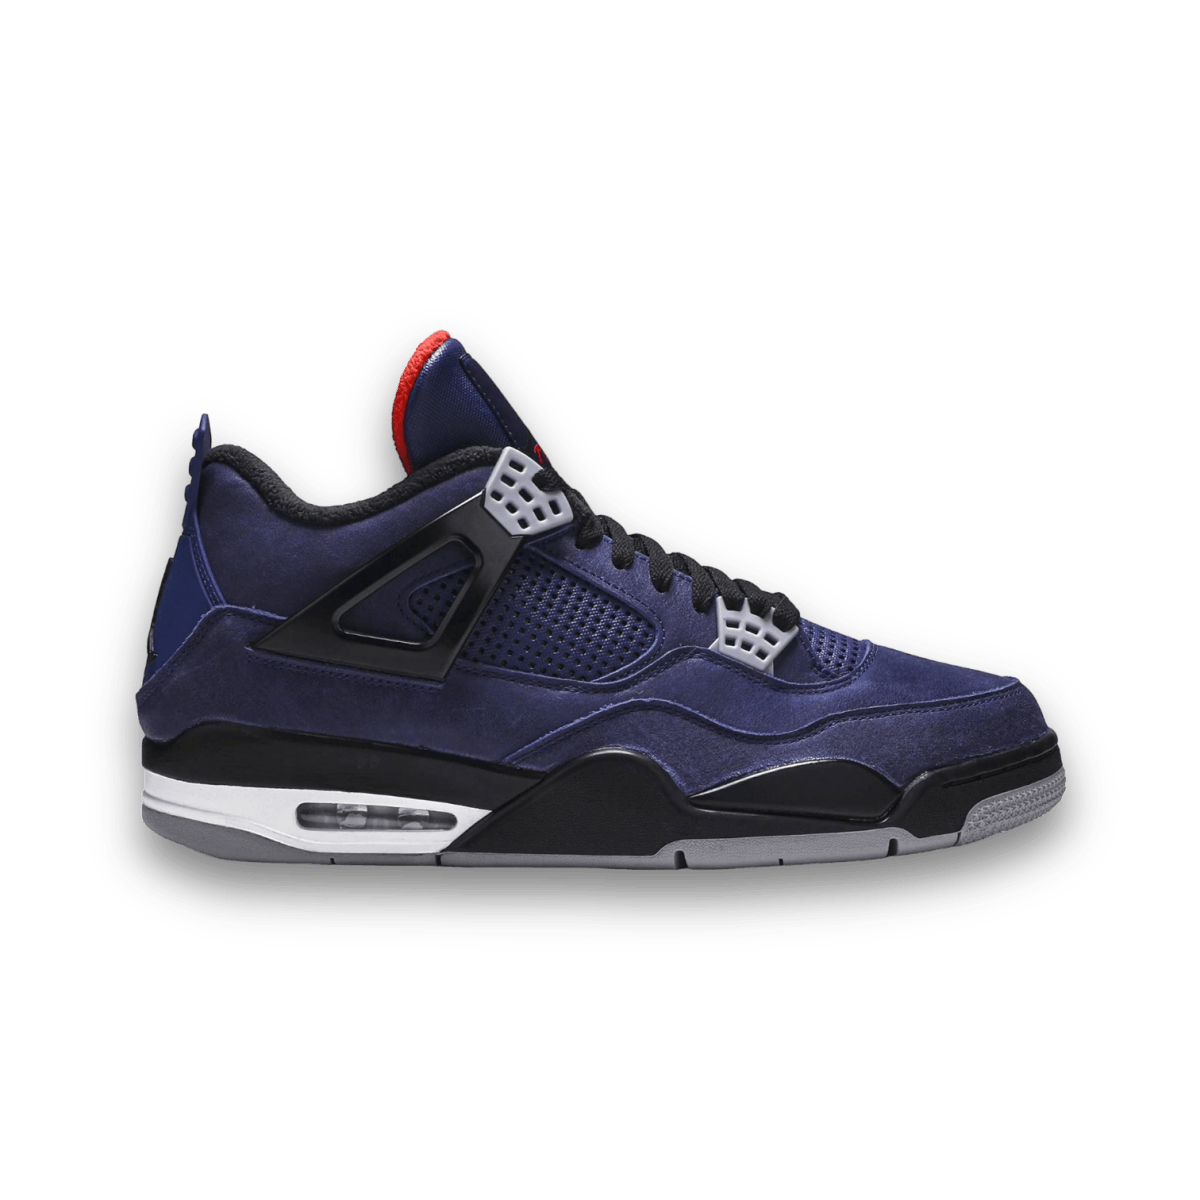 Air Jordan 4 Winter 'Loyal Blue' - Gently Enjoyed (Used) Men 13 - Mid Sneaker - Jawns on Fire Sneakers & Streetwear